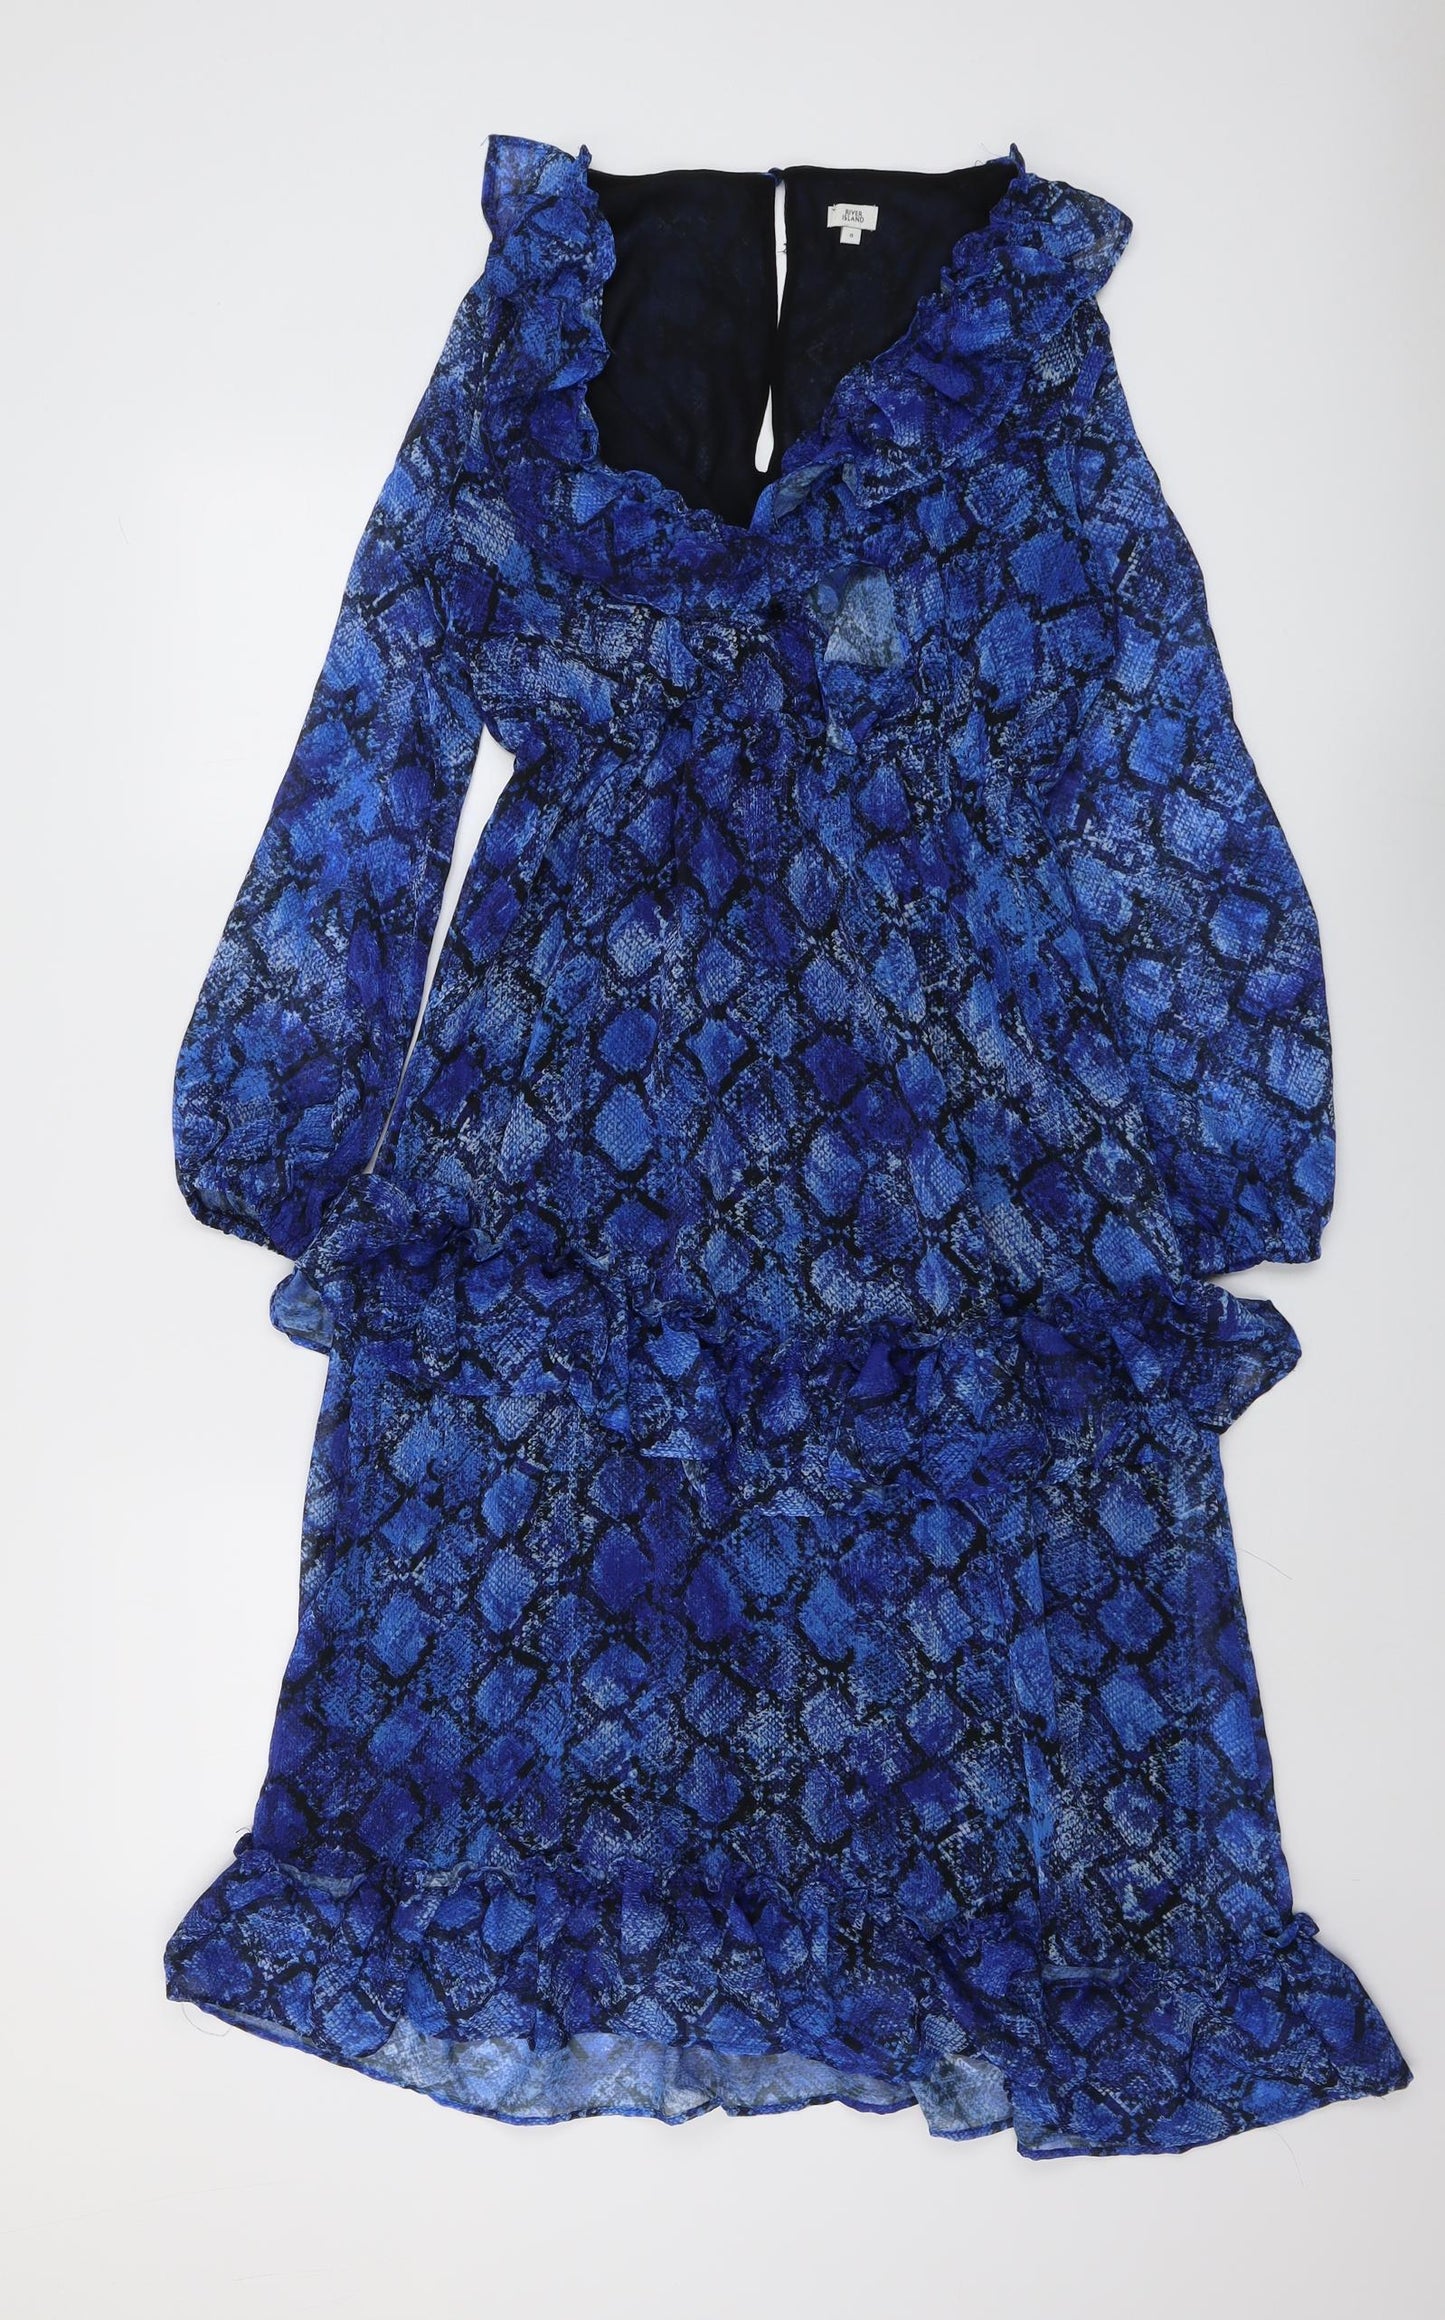 River Island Womens Blue Animal Print Polyester Trapeze & Swing Size 8 V-Neck Button - Snakeskin pattern